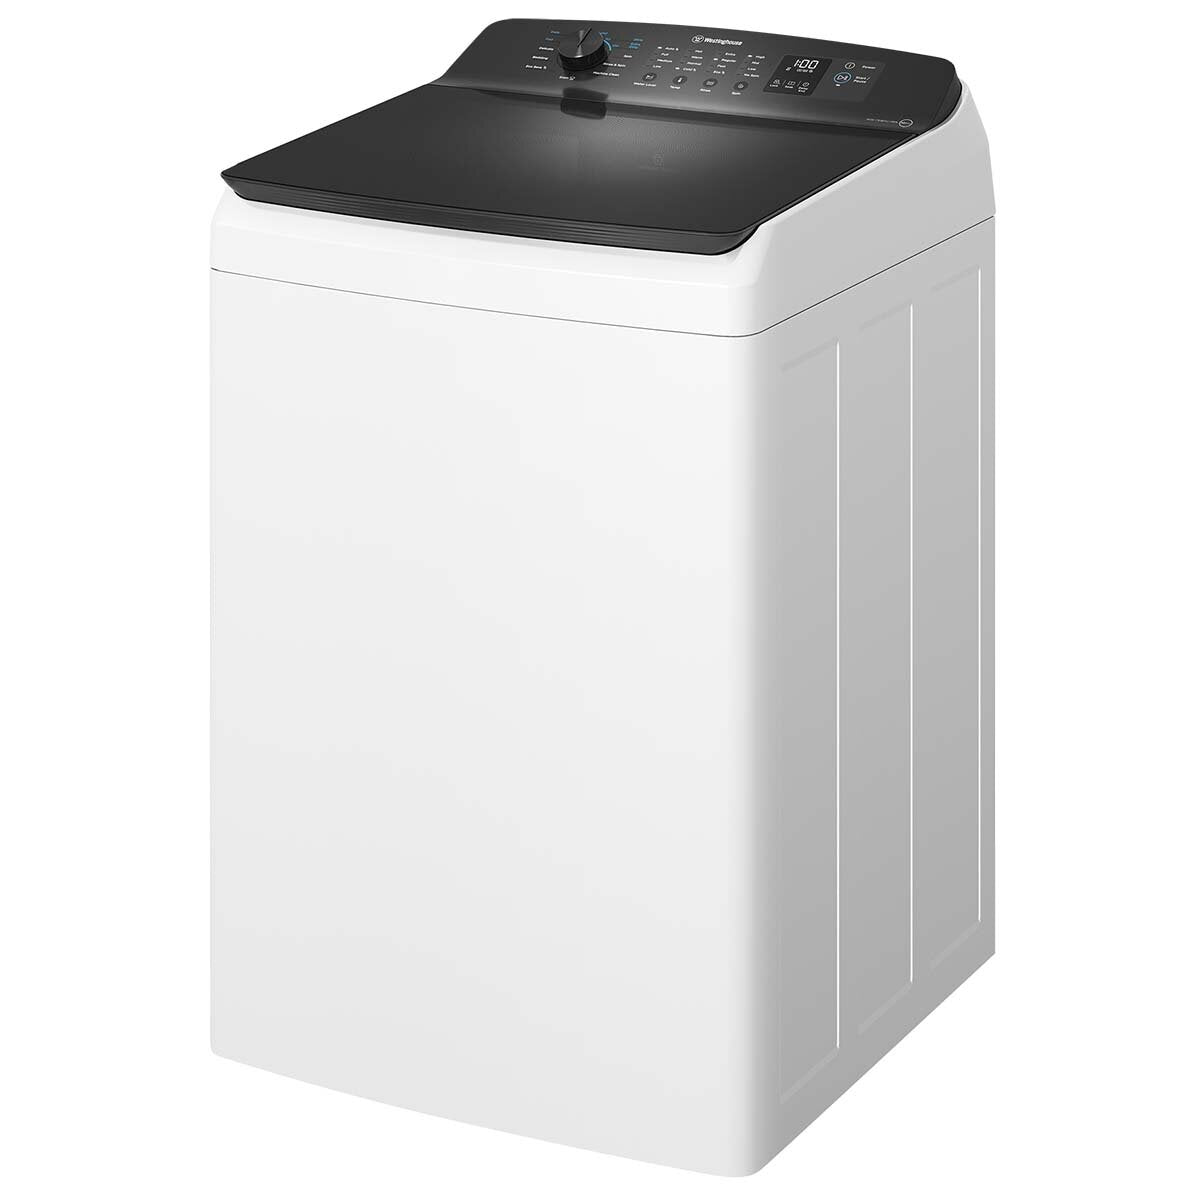 Westinghouse 10 kg Top Load Washing Machine - Brisbane Home Appliances